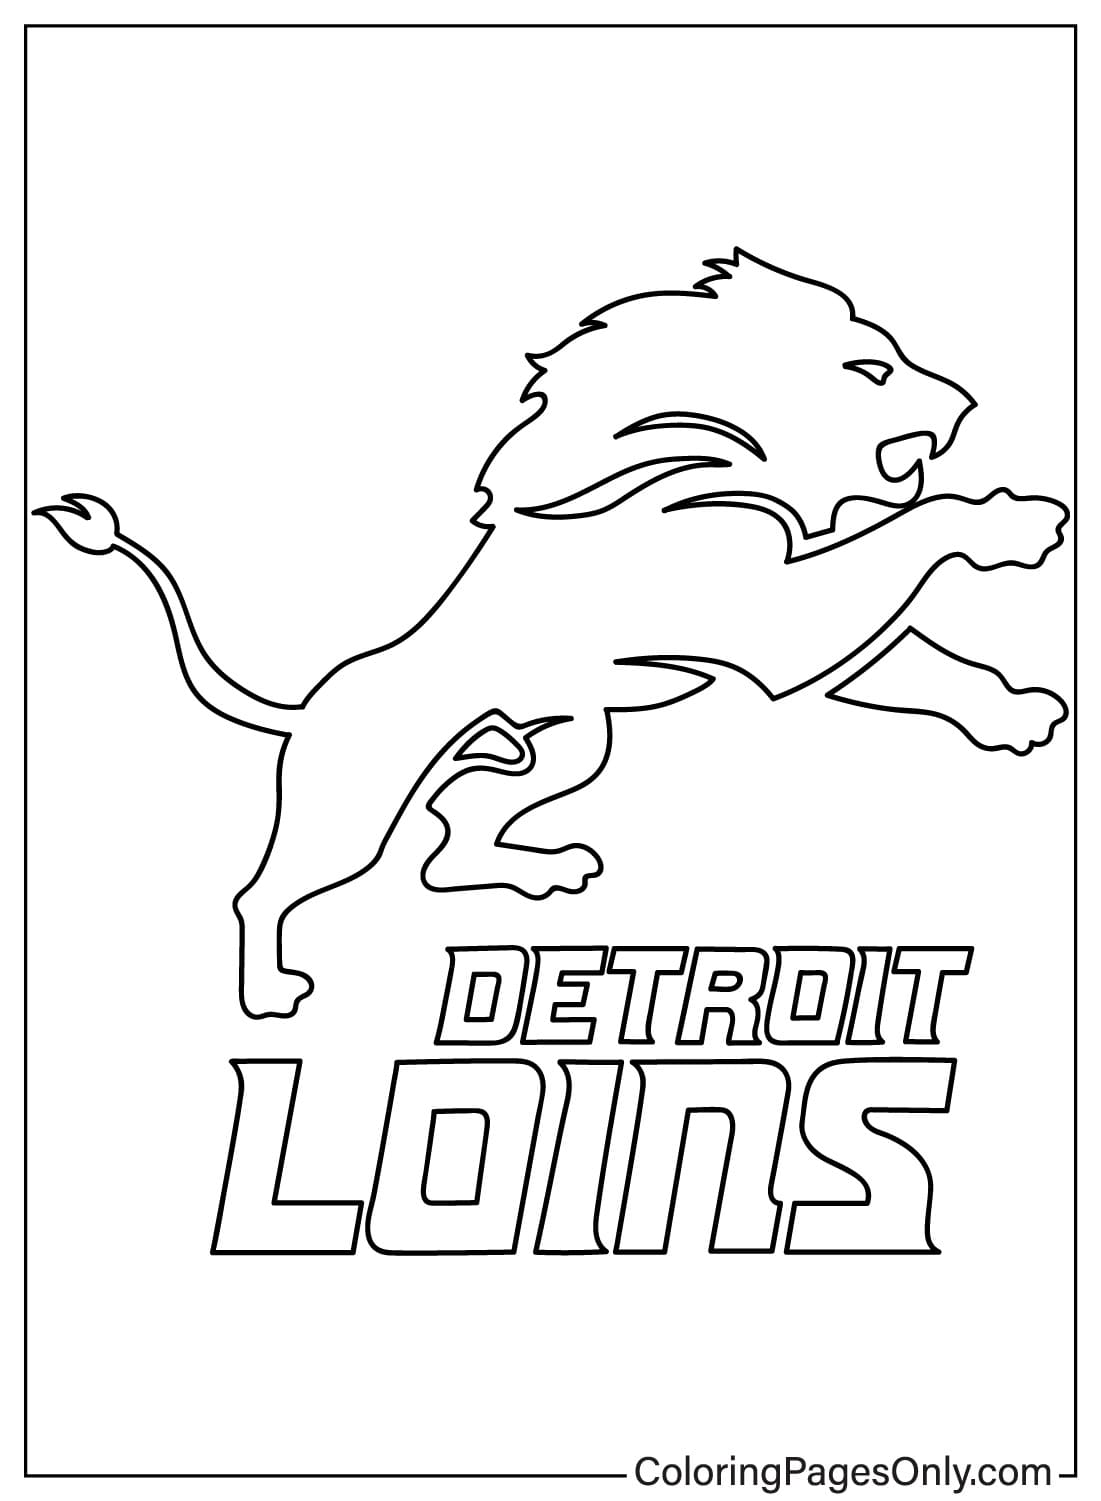 Detroit Lions Coloring Page from Detroit Lions